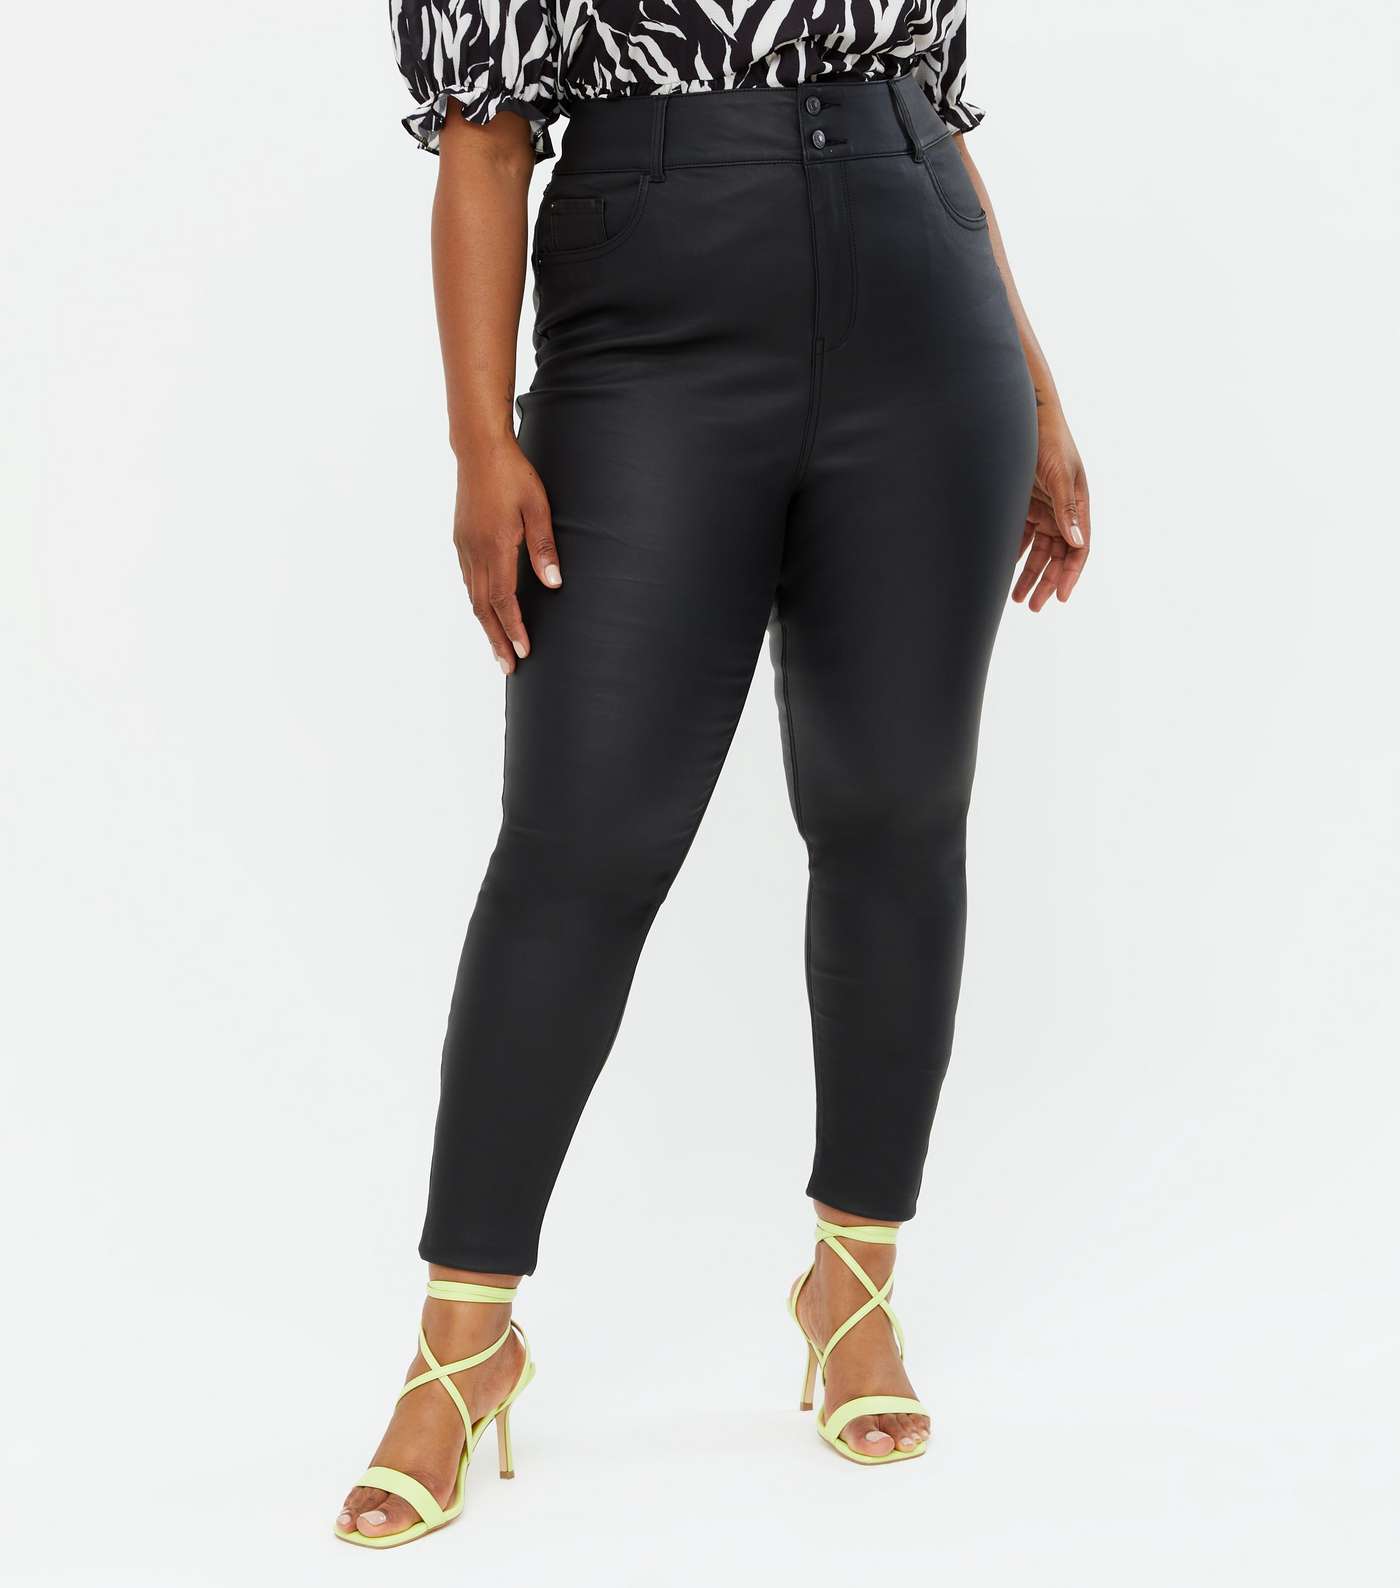 Curves Black Leather-Look Lift & Shape Jenna Skinny Jeans Image 2